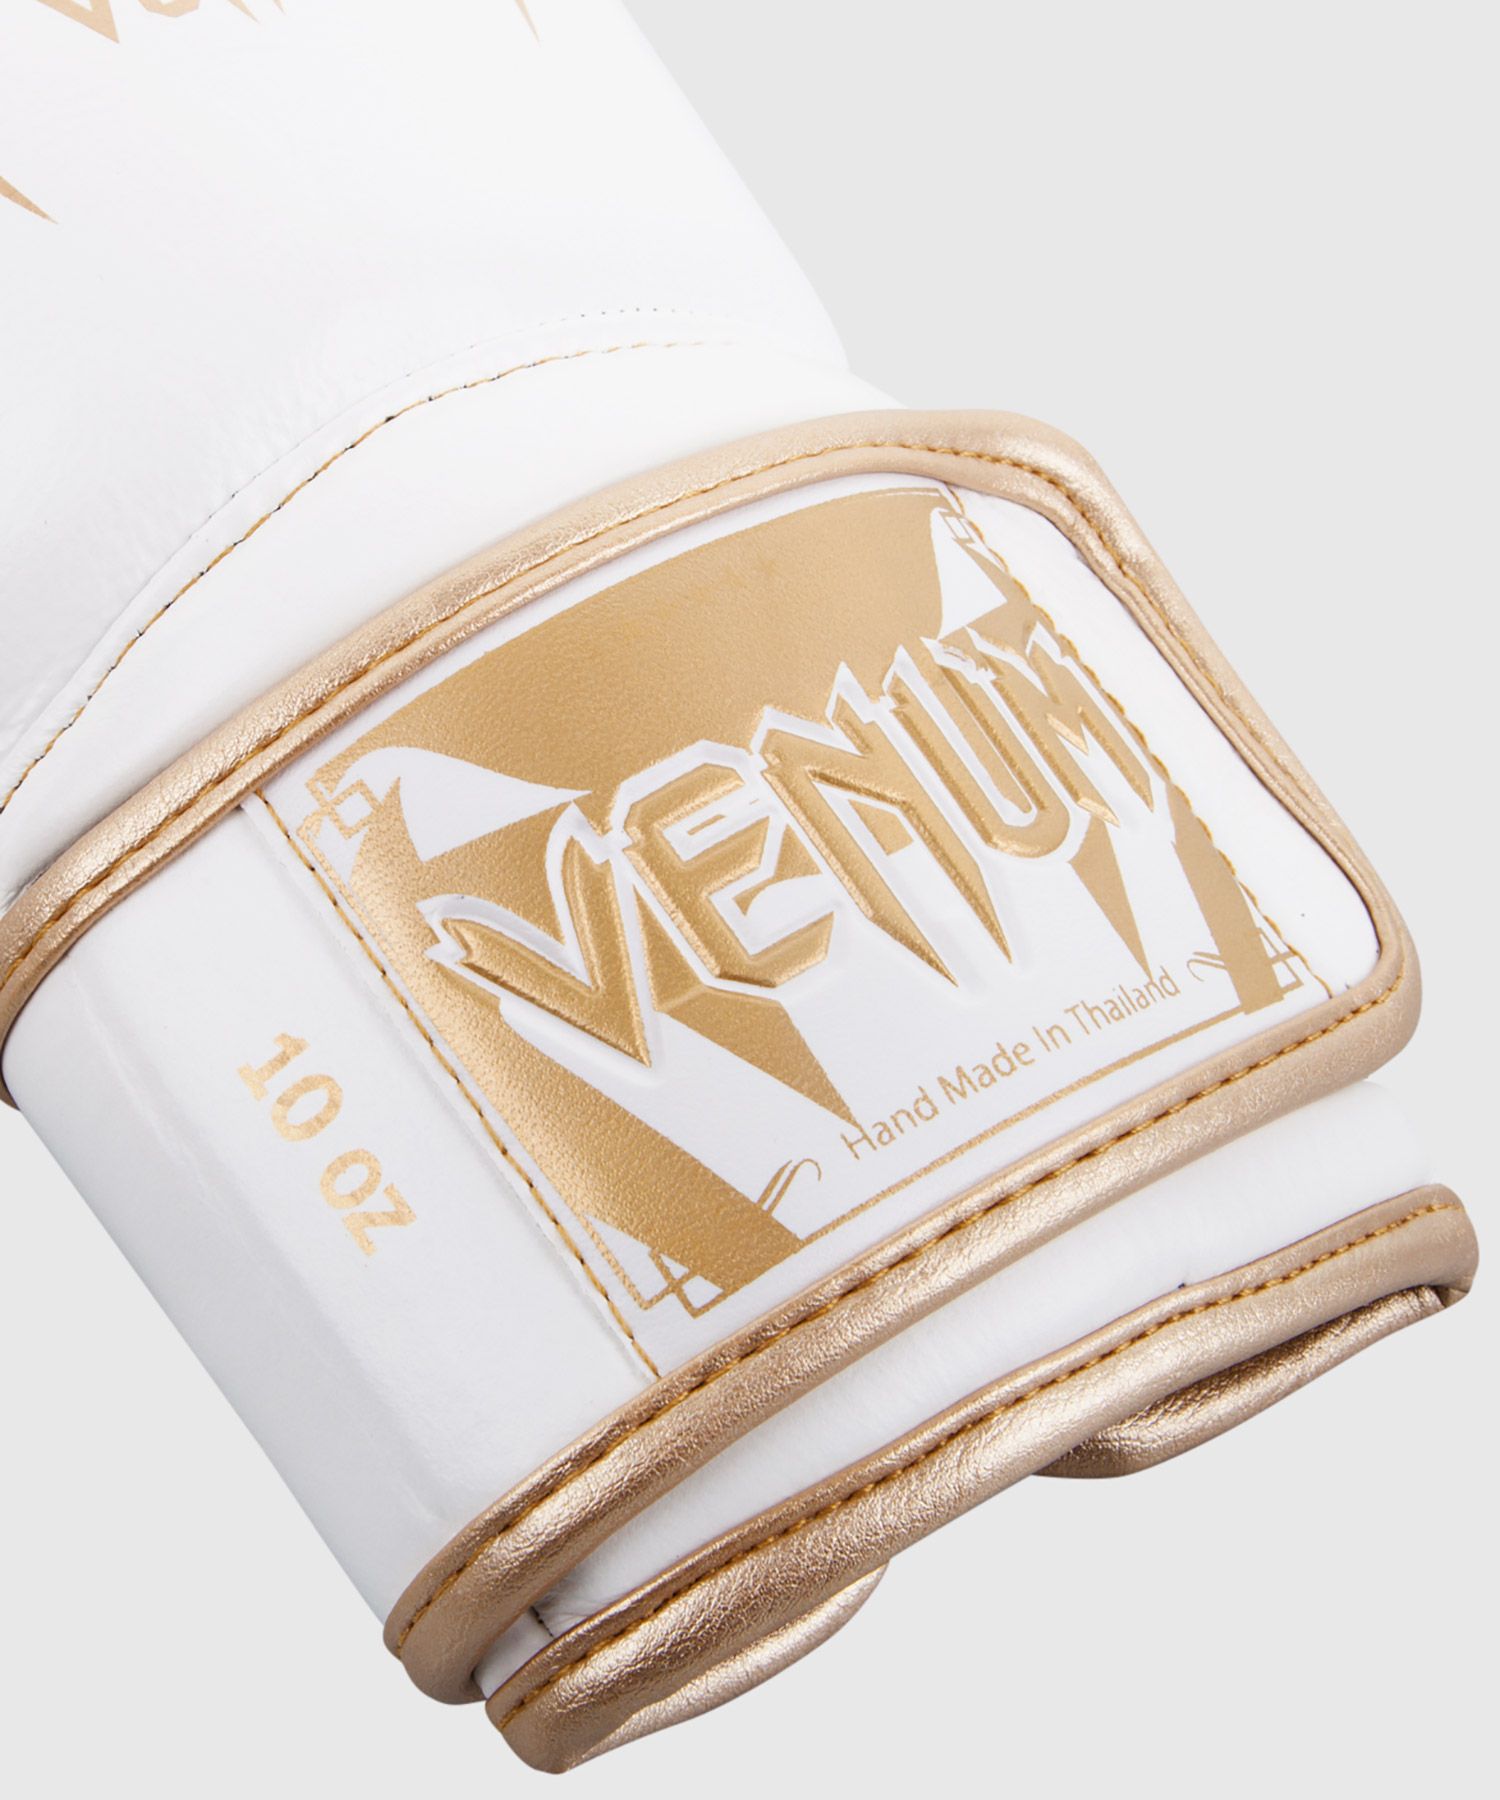 Venum Giant 3.0 ボクシング グローブ - ナッパ レザー - ホワイト/ゴールド